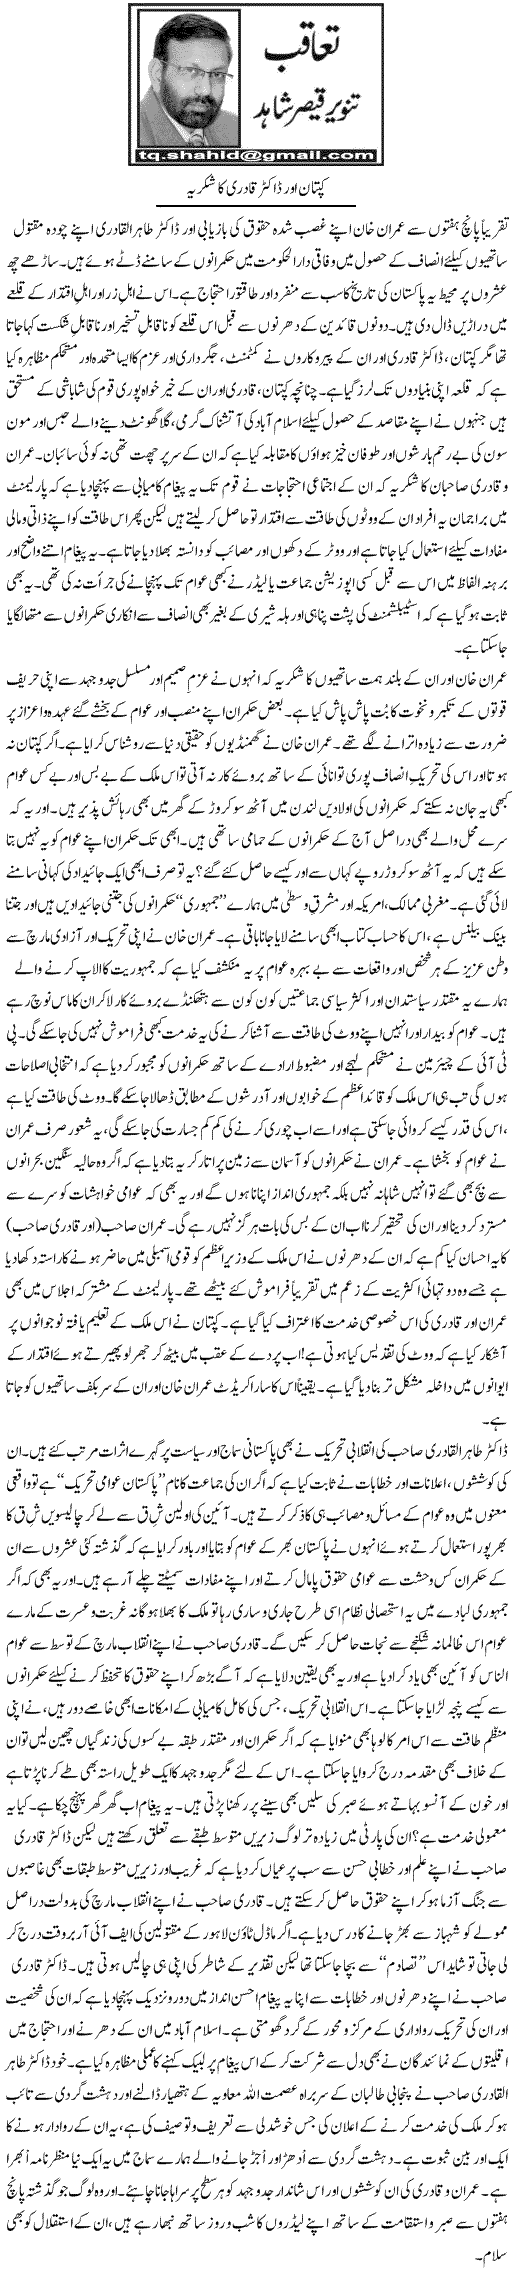 Minhaj-ul-Quran  Print Media Coverage Daily Express - Tanvir Qaiser Shahid